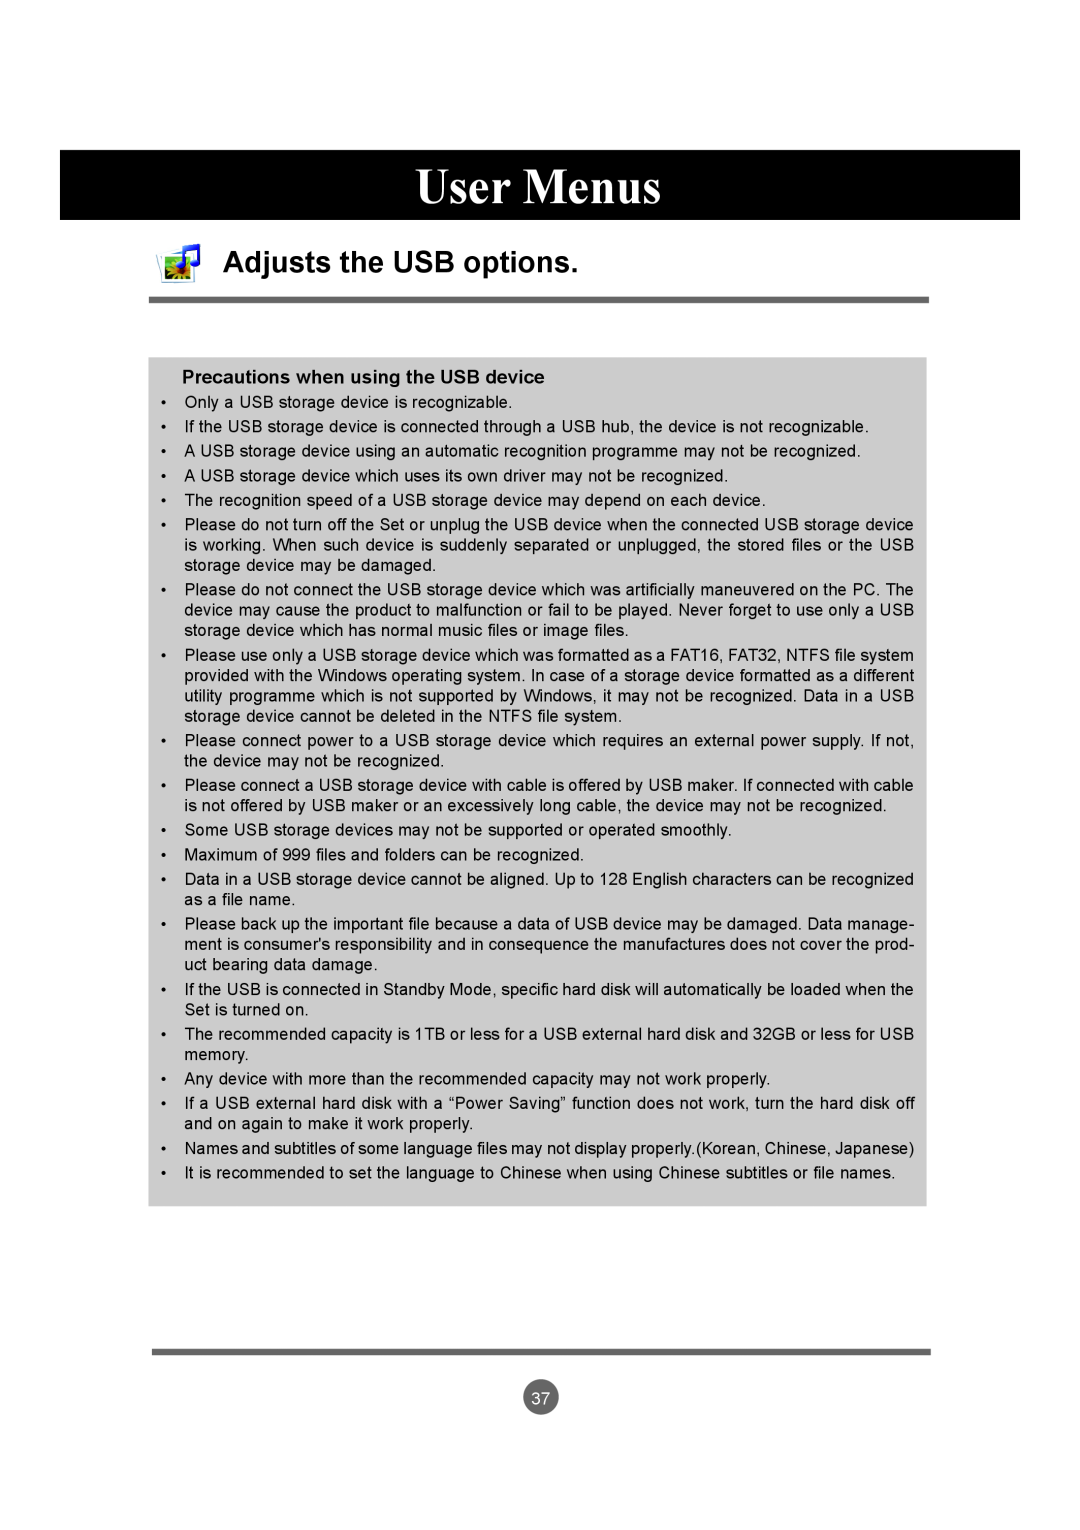 LG Electronics M5520C, M4720C owner manual User Menus, Adjusts the USB options, Precautions when using the USB device 